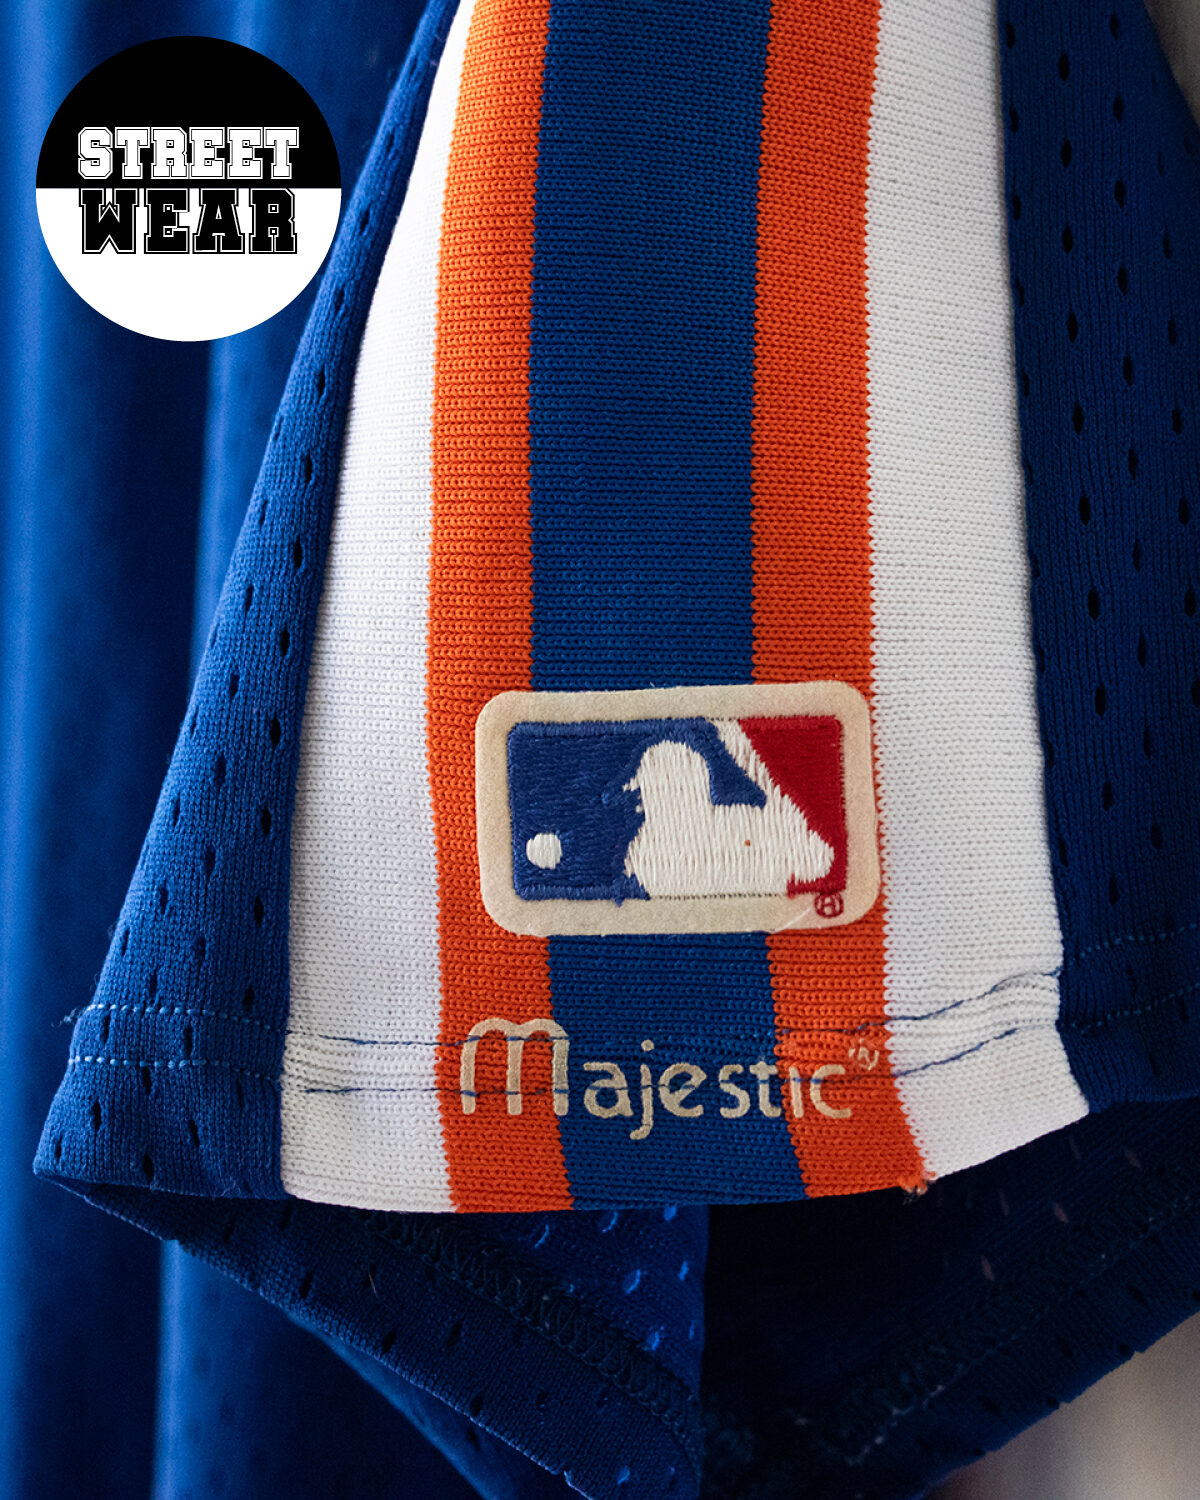 Majestic - New York Mets jersey